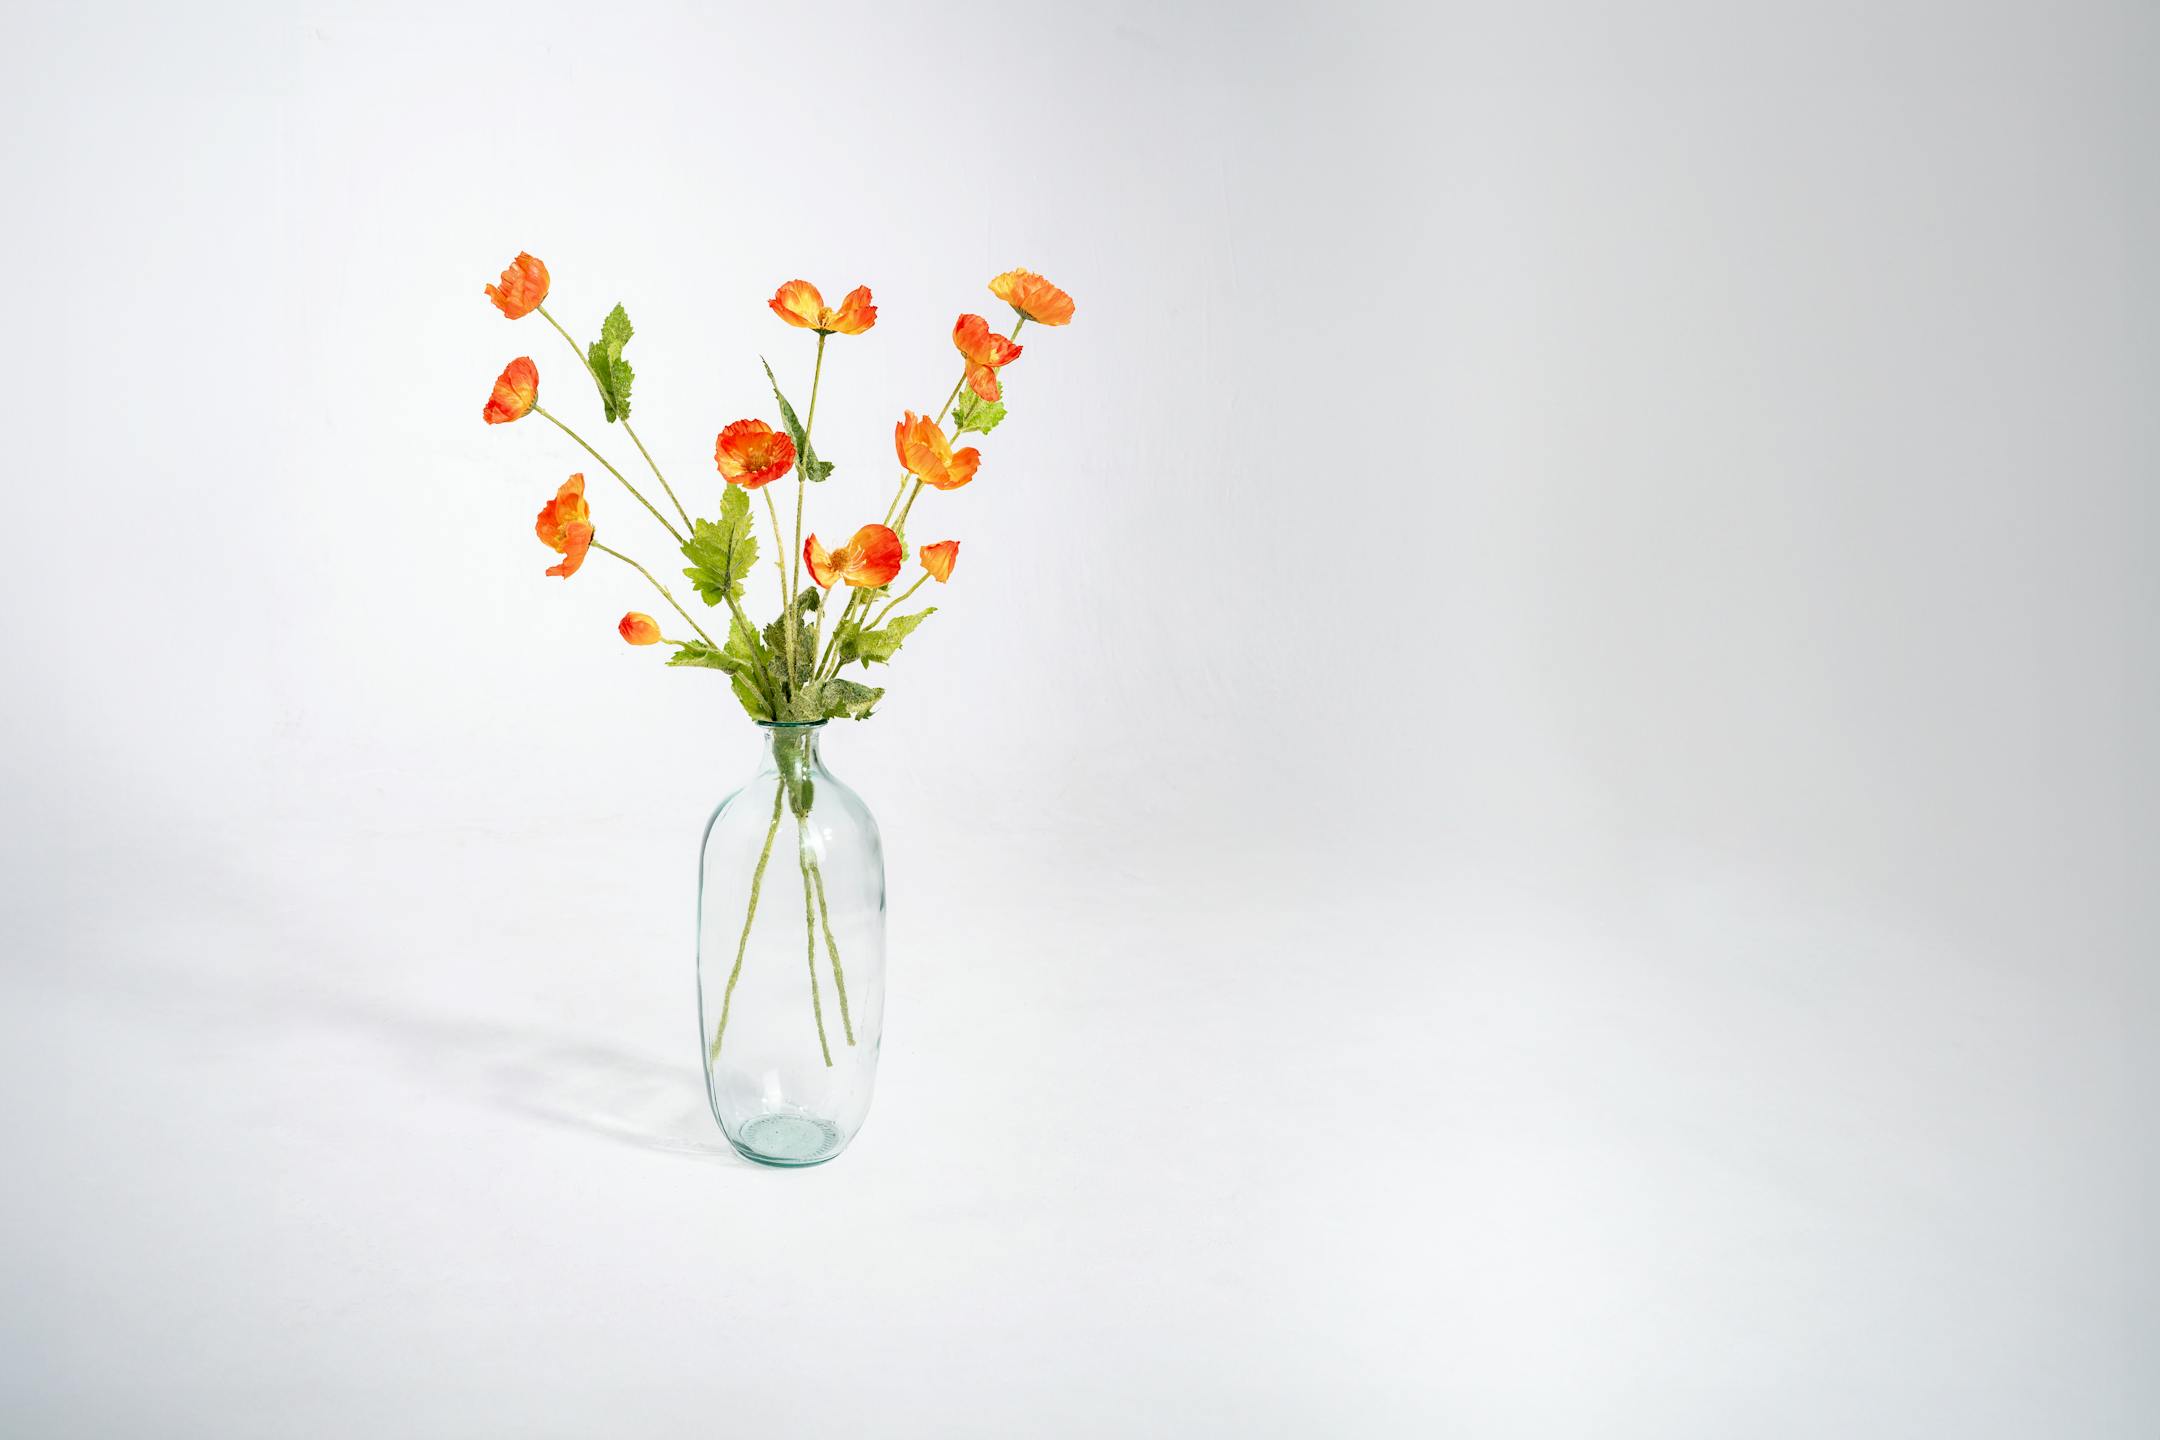 Three artificial poppy stems in glass vase